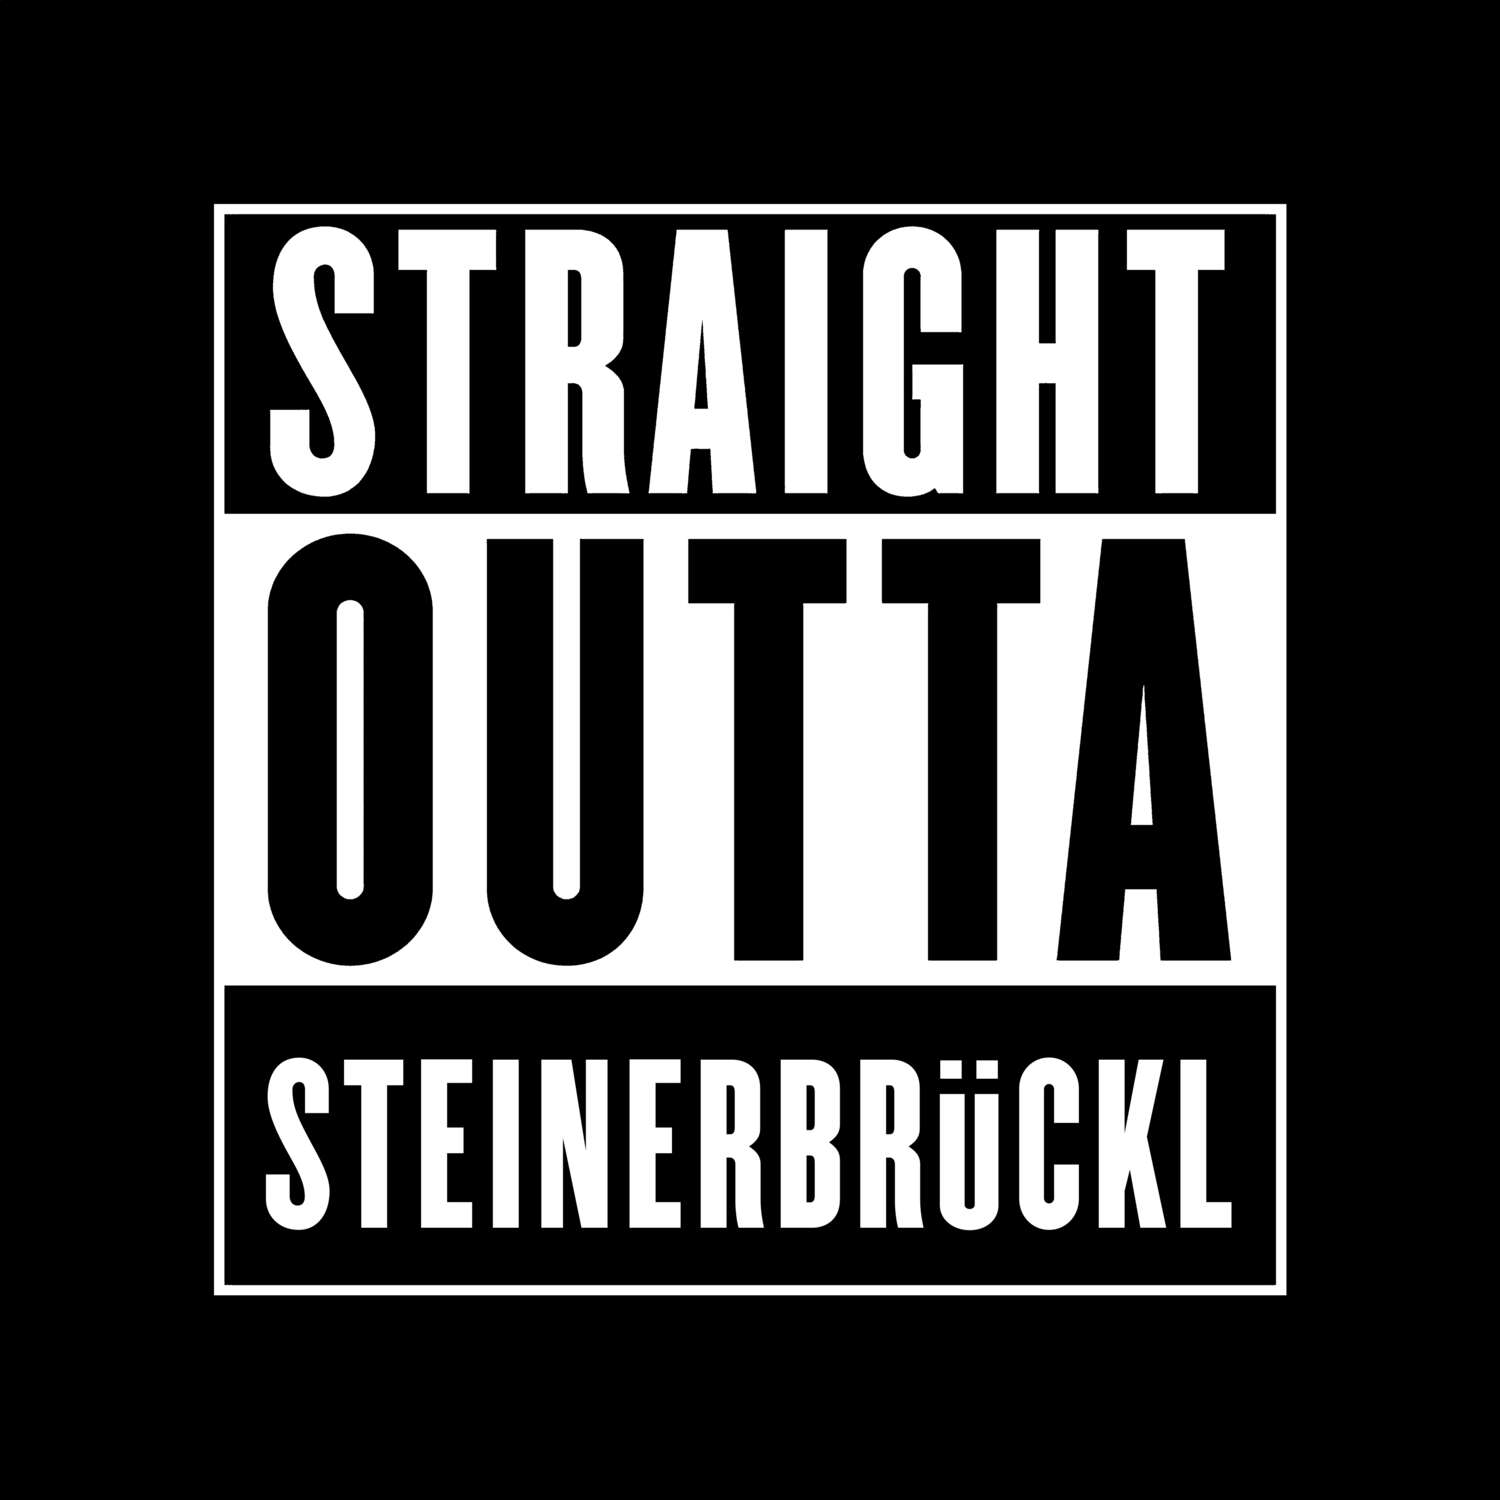 Steinerbrückl T-Shirt »Straight Outta«